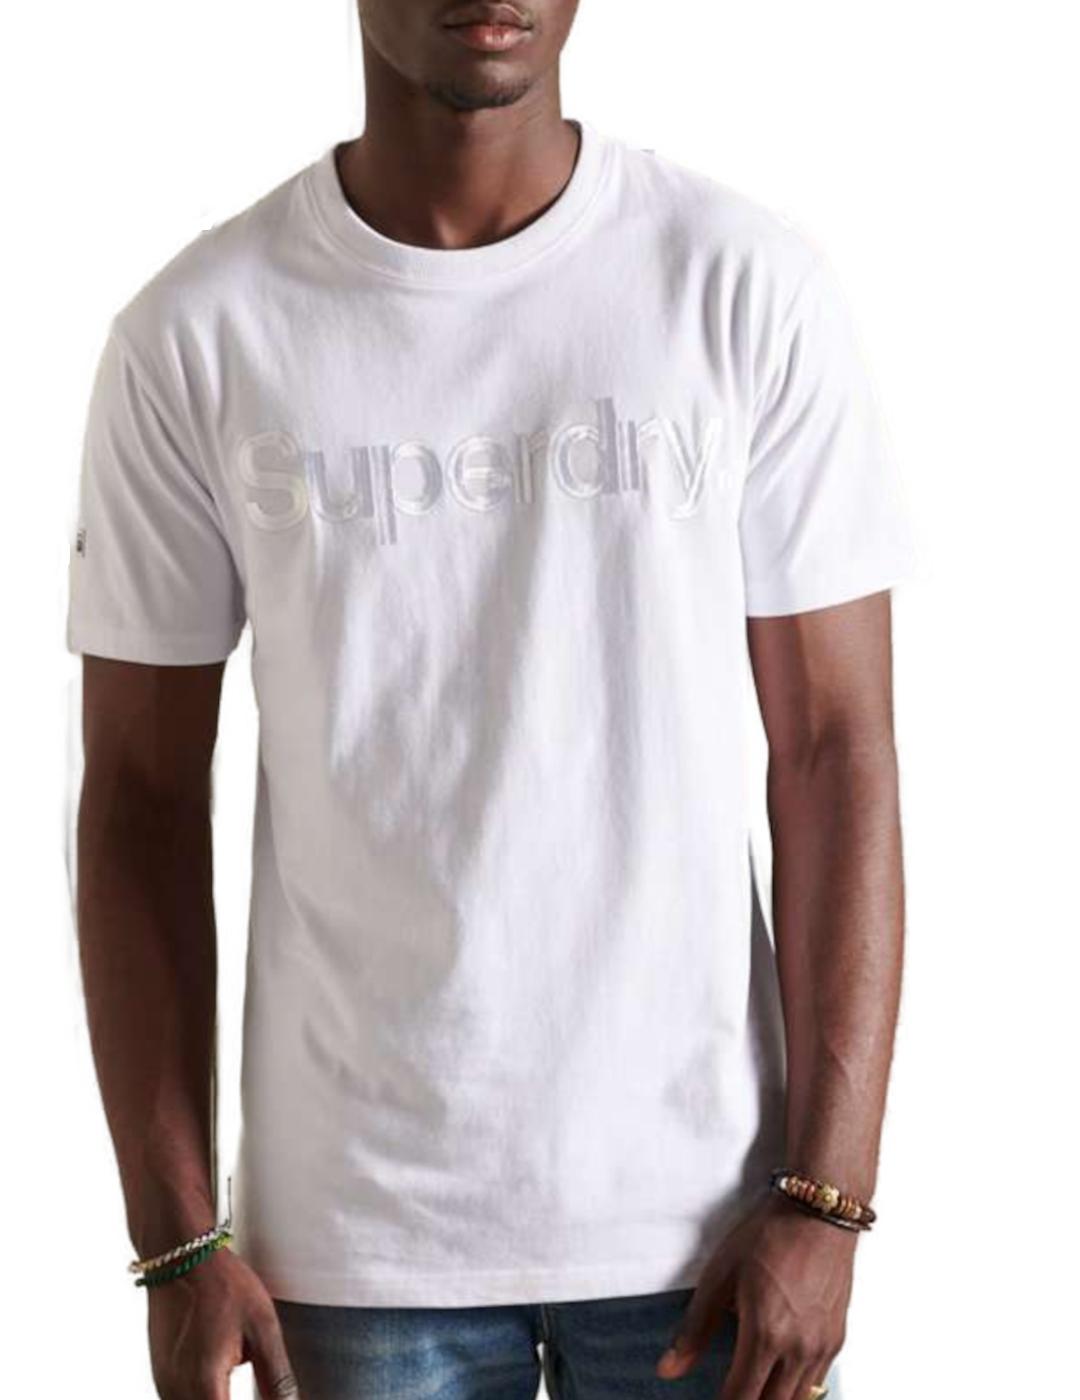 Camiseta Supedry CL source blanco para hombre-z